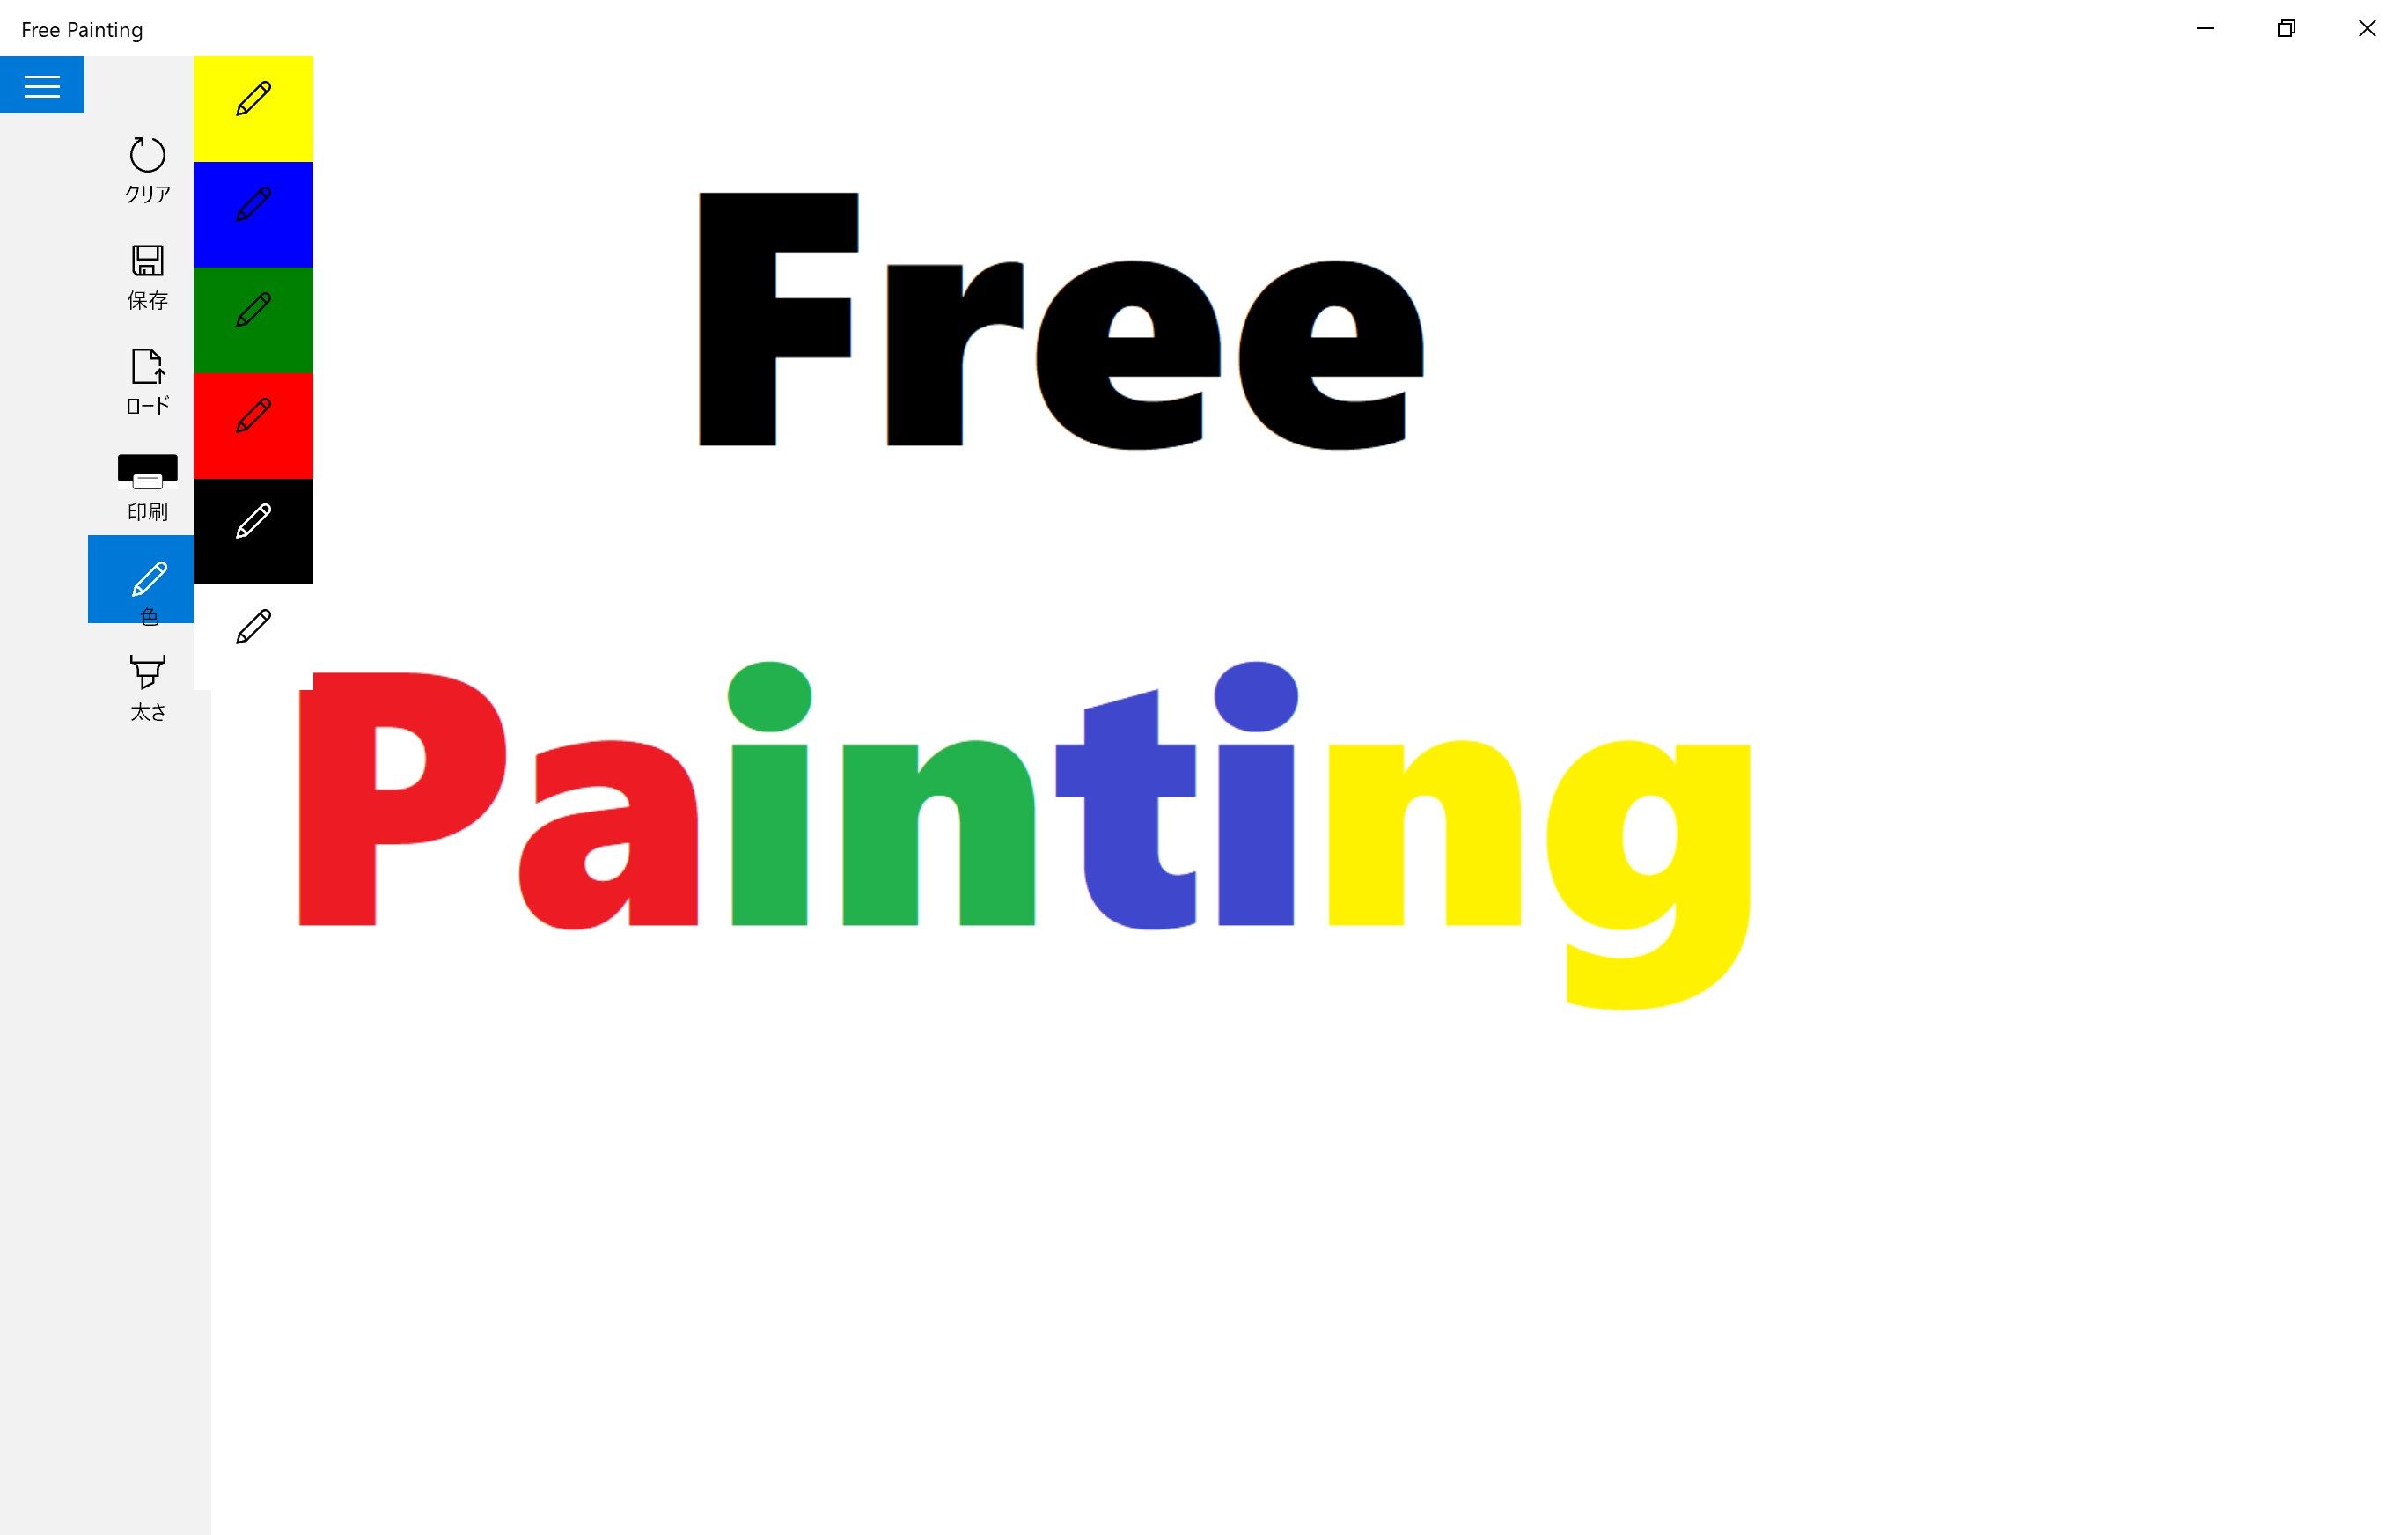 Free Painting